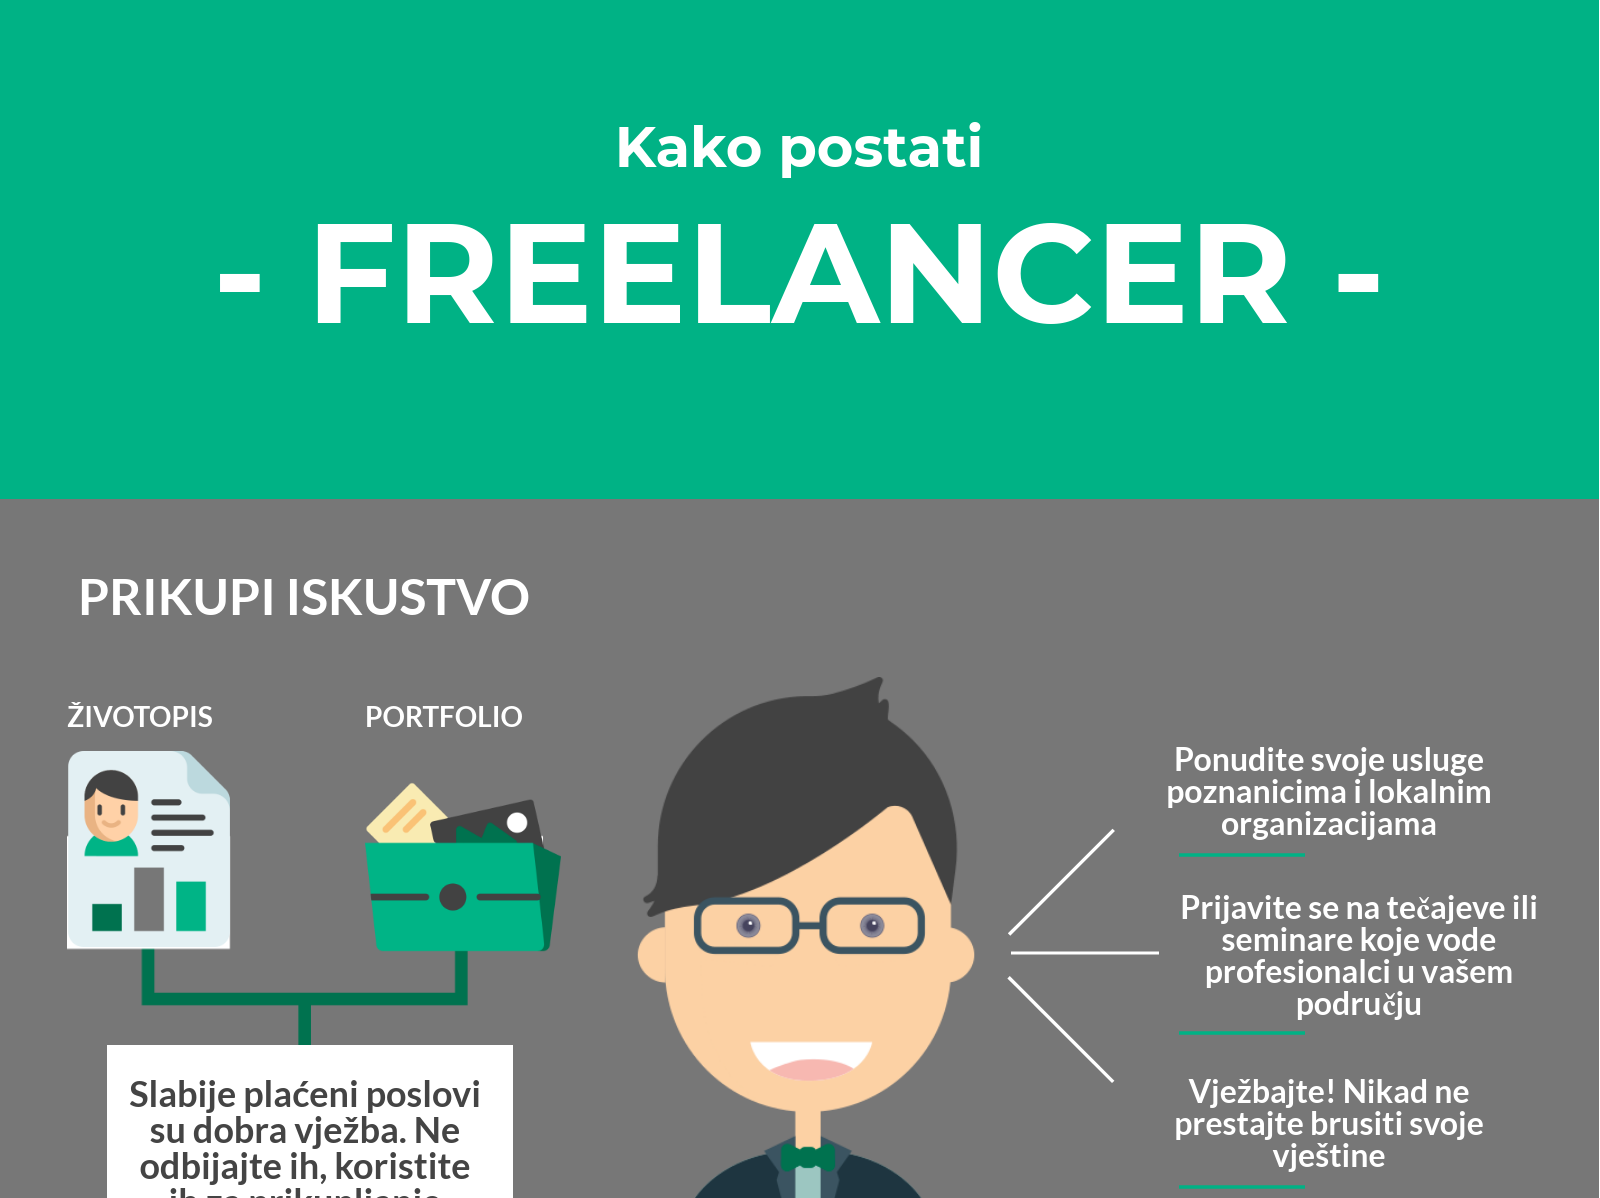 Kako postati freelancer